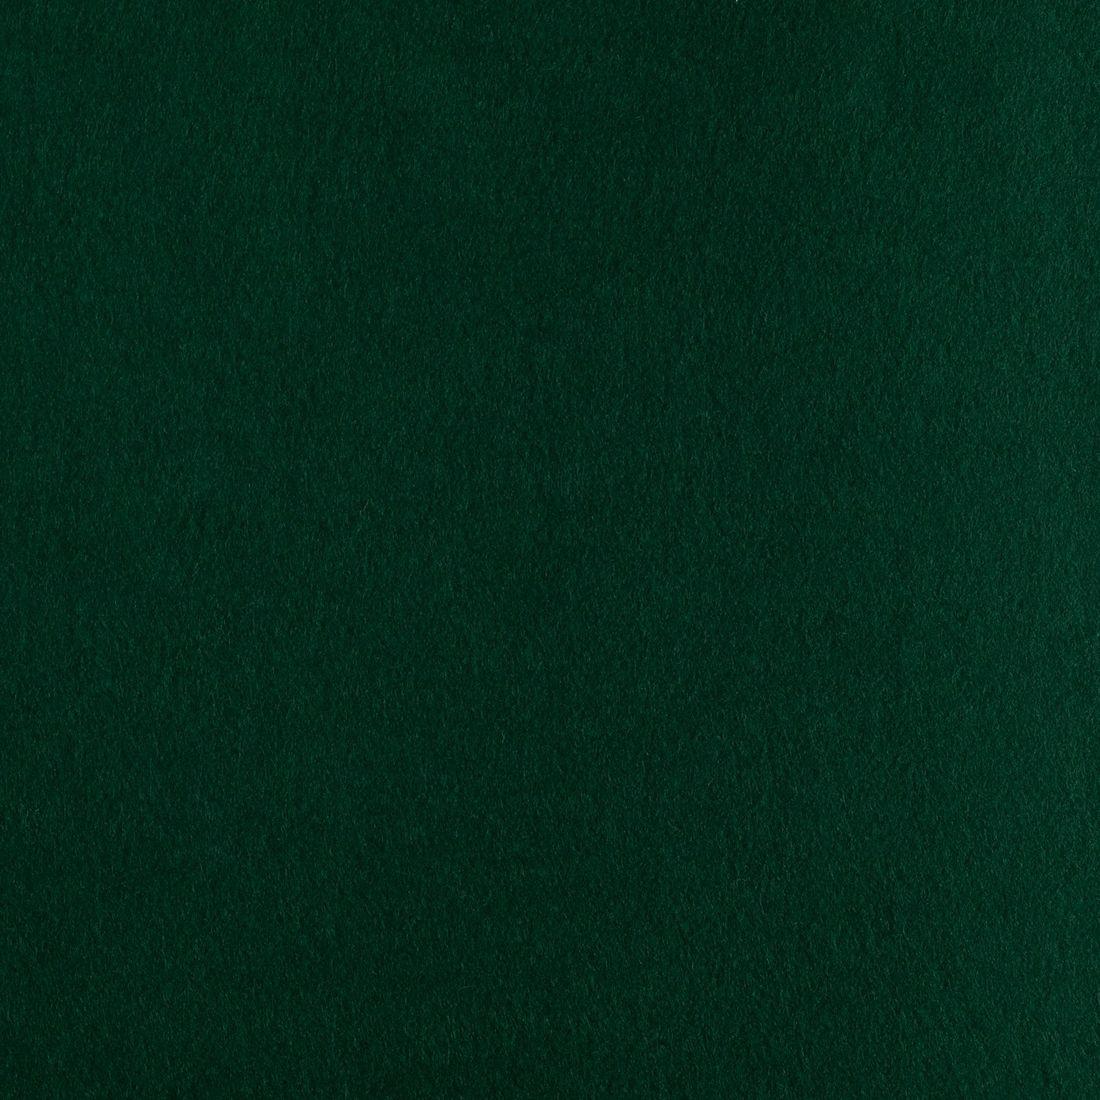 Taschen Wollfilz - dunkelgrün